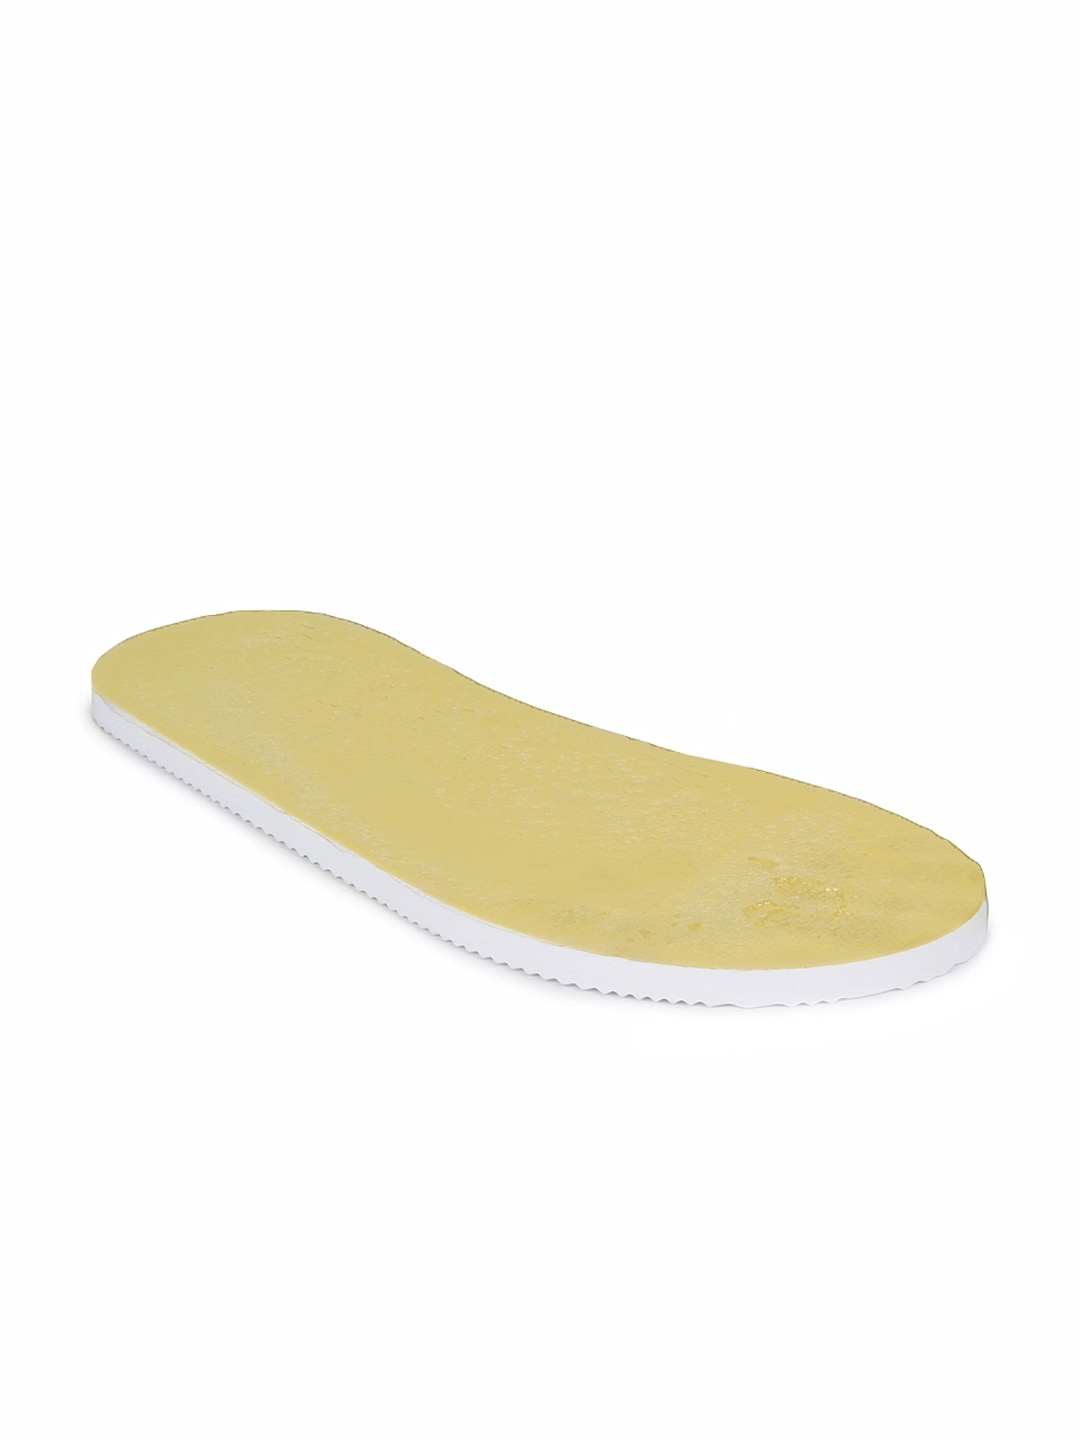 Strapless Unisex Yellow Flip Flops